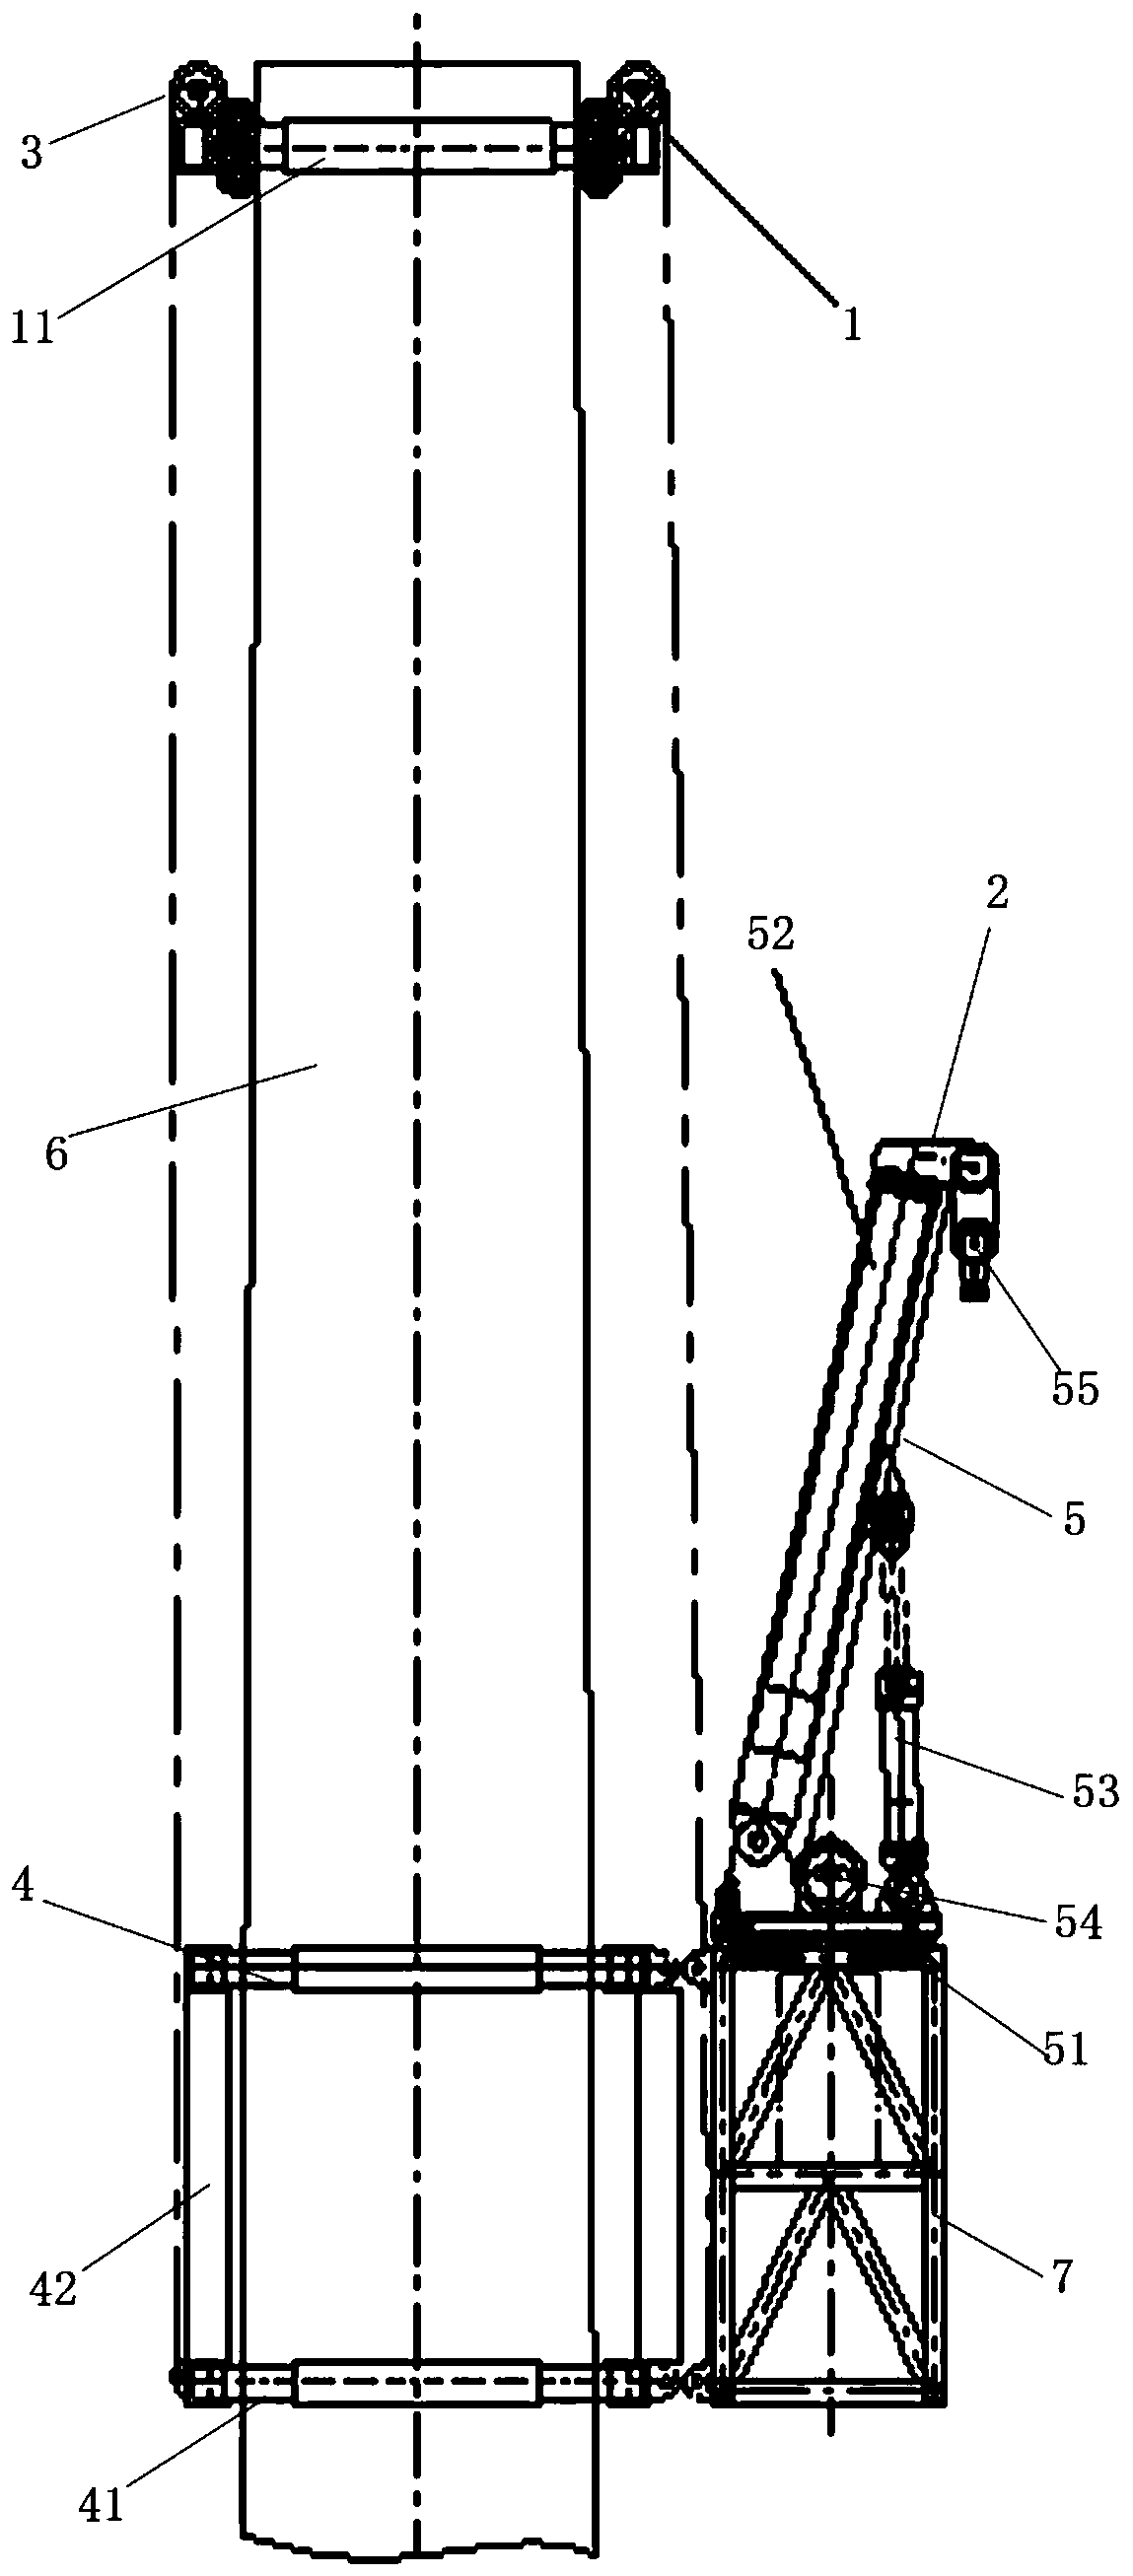 Self-climbing wind power maintenance crane